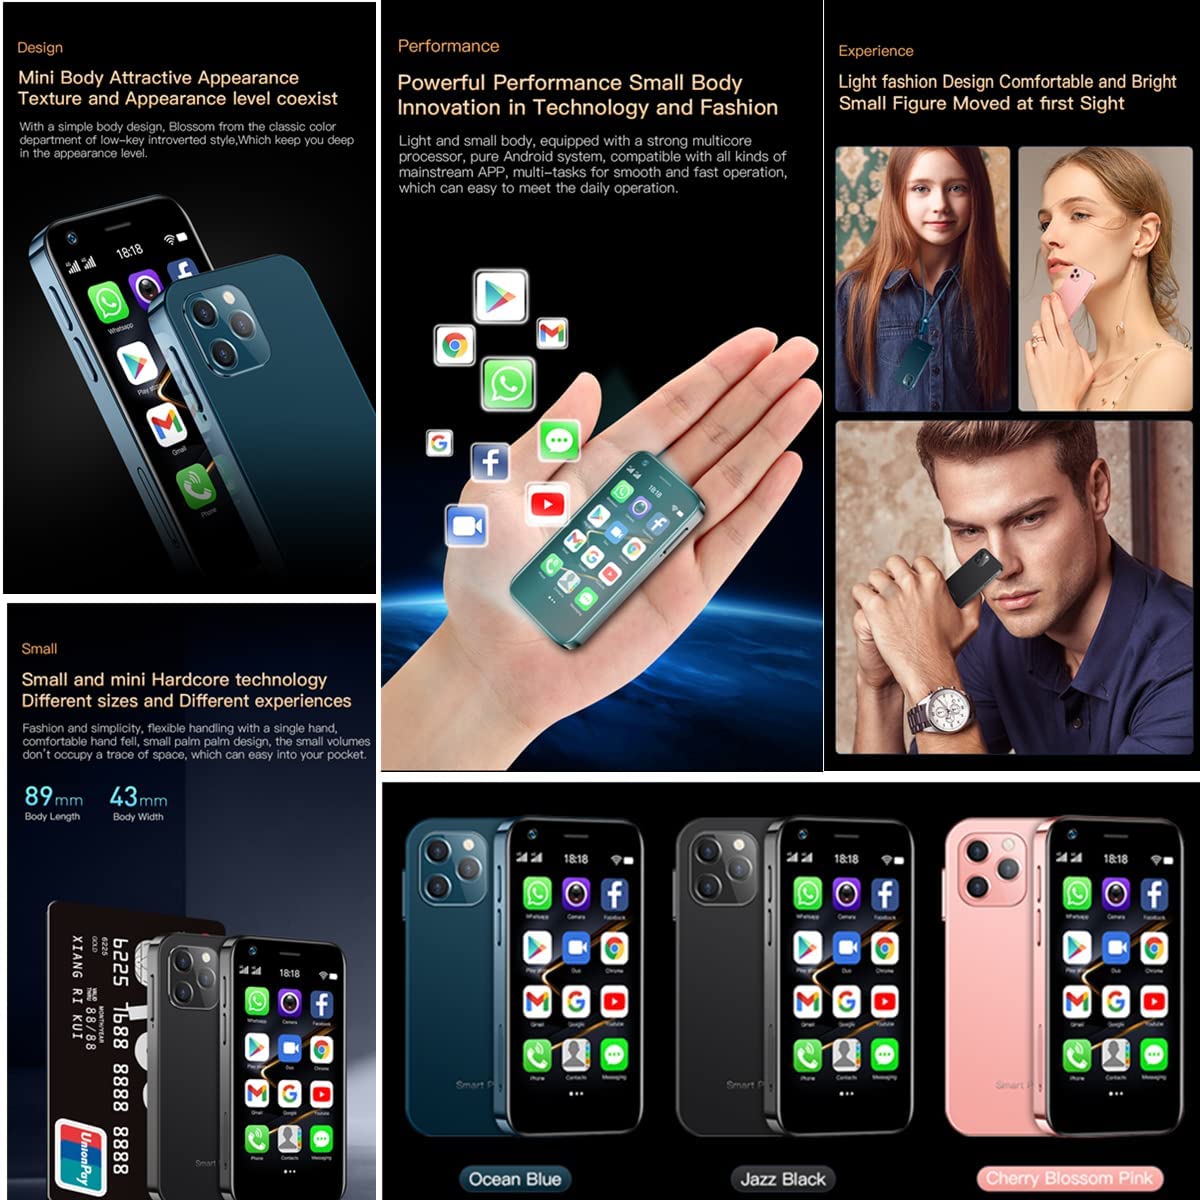 Global Version Soyes XS12 Mini 4G Smartphone 3.0 Inch Dual Sim Ultra Thin Unlocked Card Mobile Phone WiFi Bluetooth Hotspot Student Pocket Cellphone (Black 32GB)